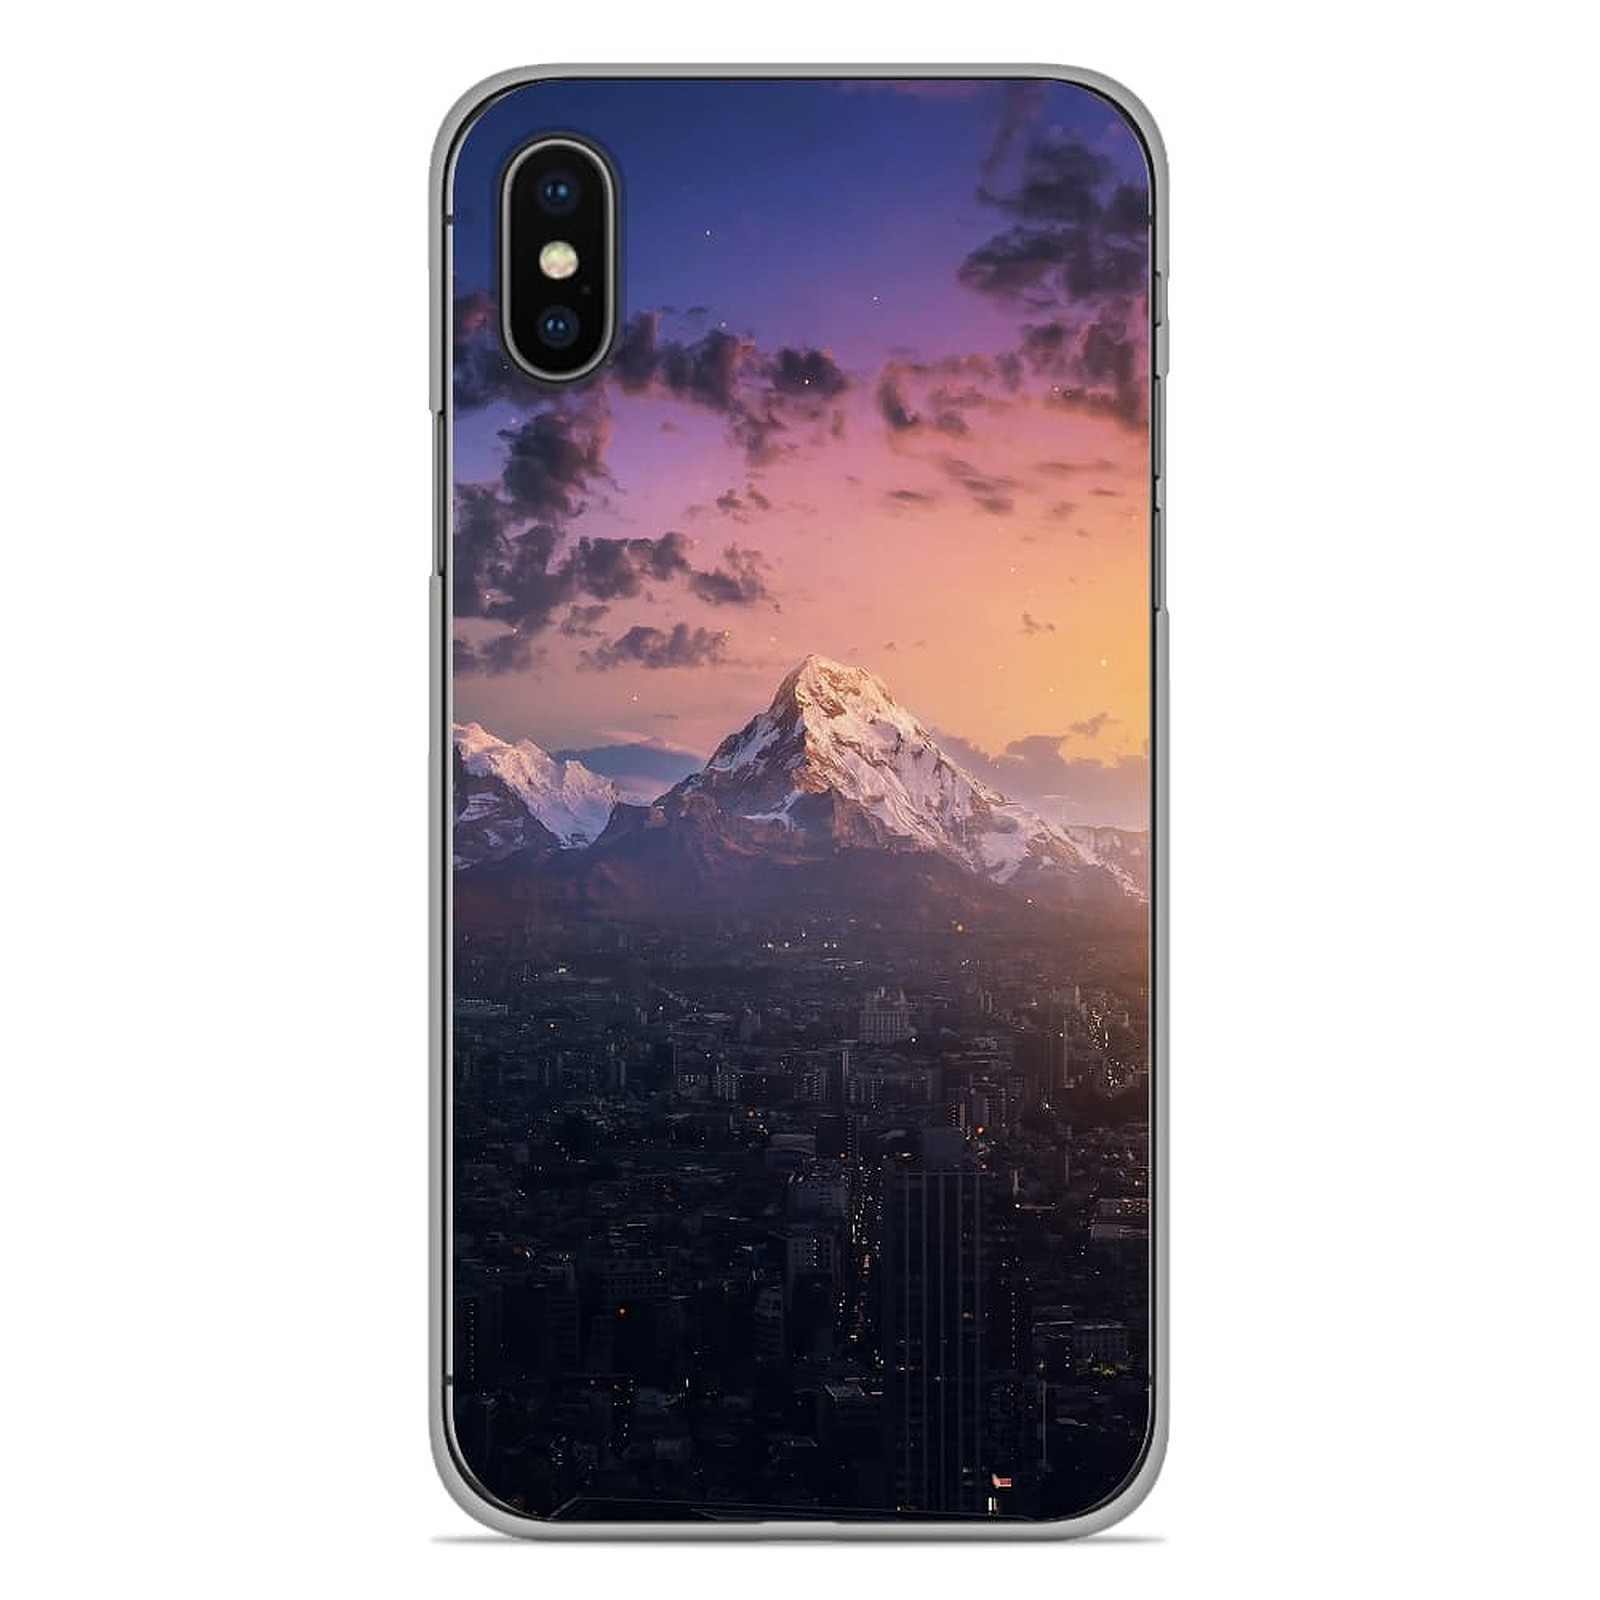 1001 Coques Coque silicone gel Apple iPhone X / XS motif Montagnes urbaines - Coque telephone 1001Coques